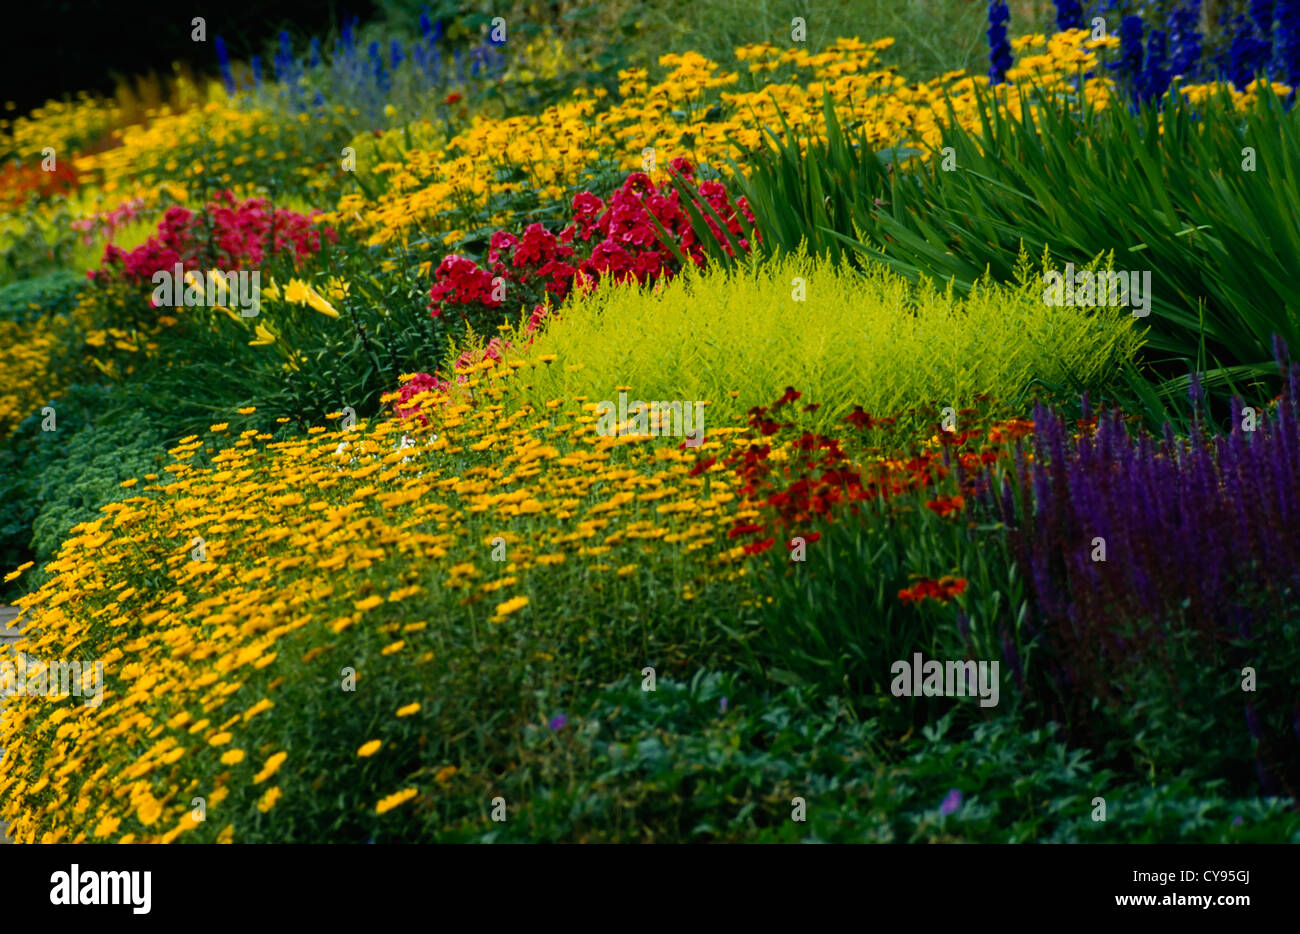 Garden, Flower. Stock Photo